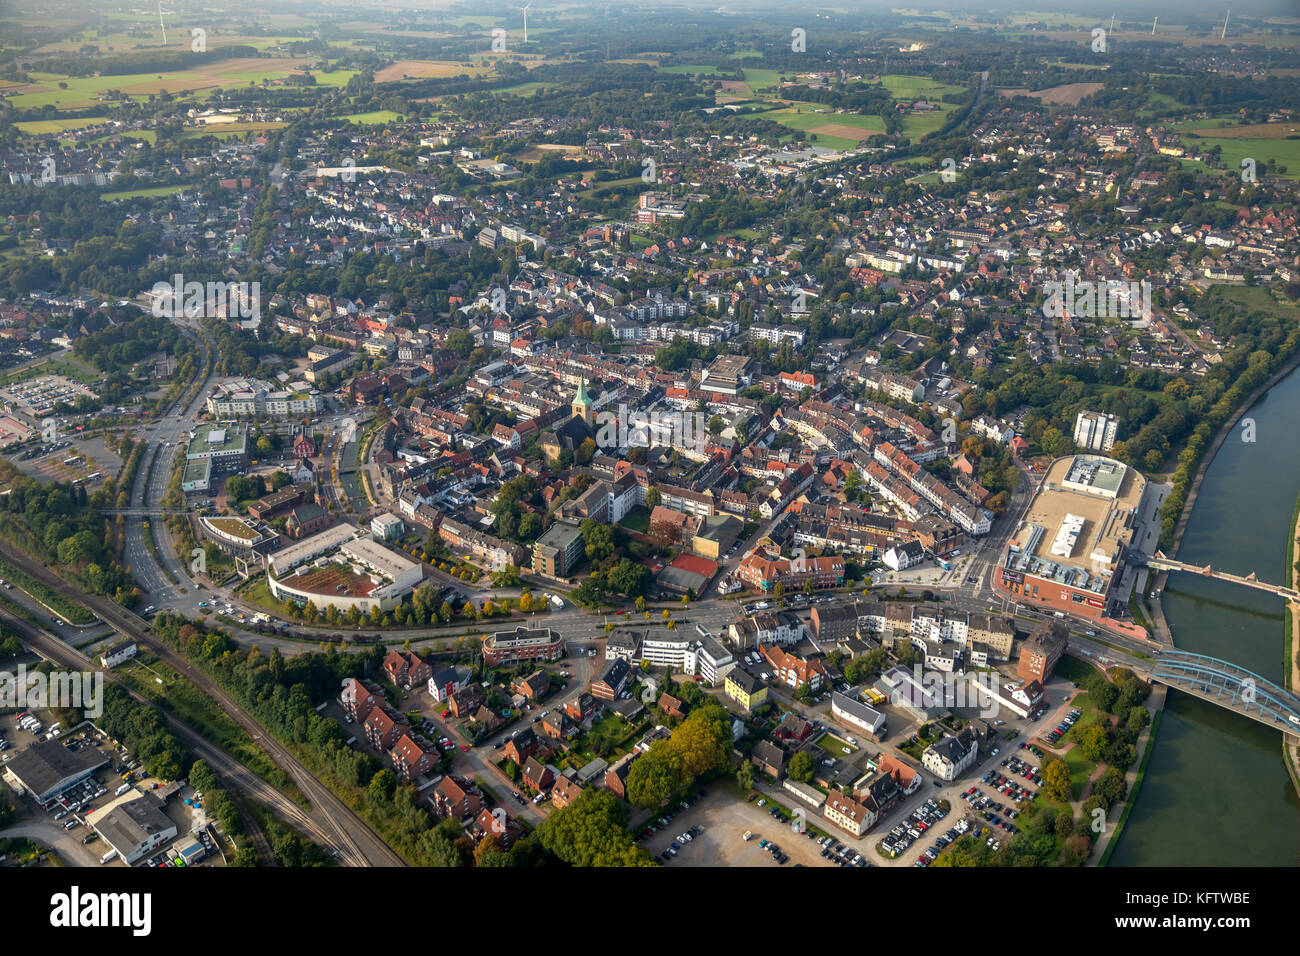 City center of Dorsten with shopping center Mercaden Dorsten, Dorsten, Ruhr area, North Rhine-Westphalia, Germany, Dorsten, Europe, aerial view, aeria Stock Photo